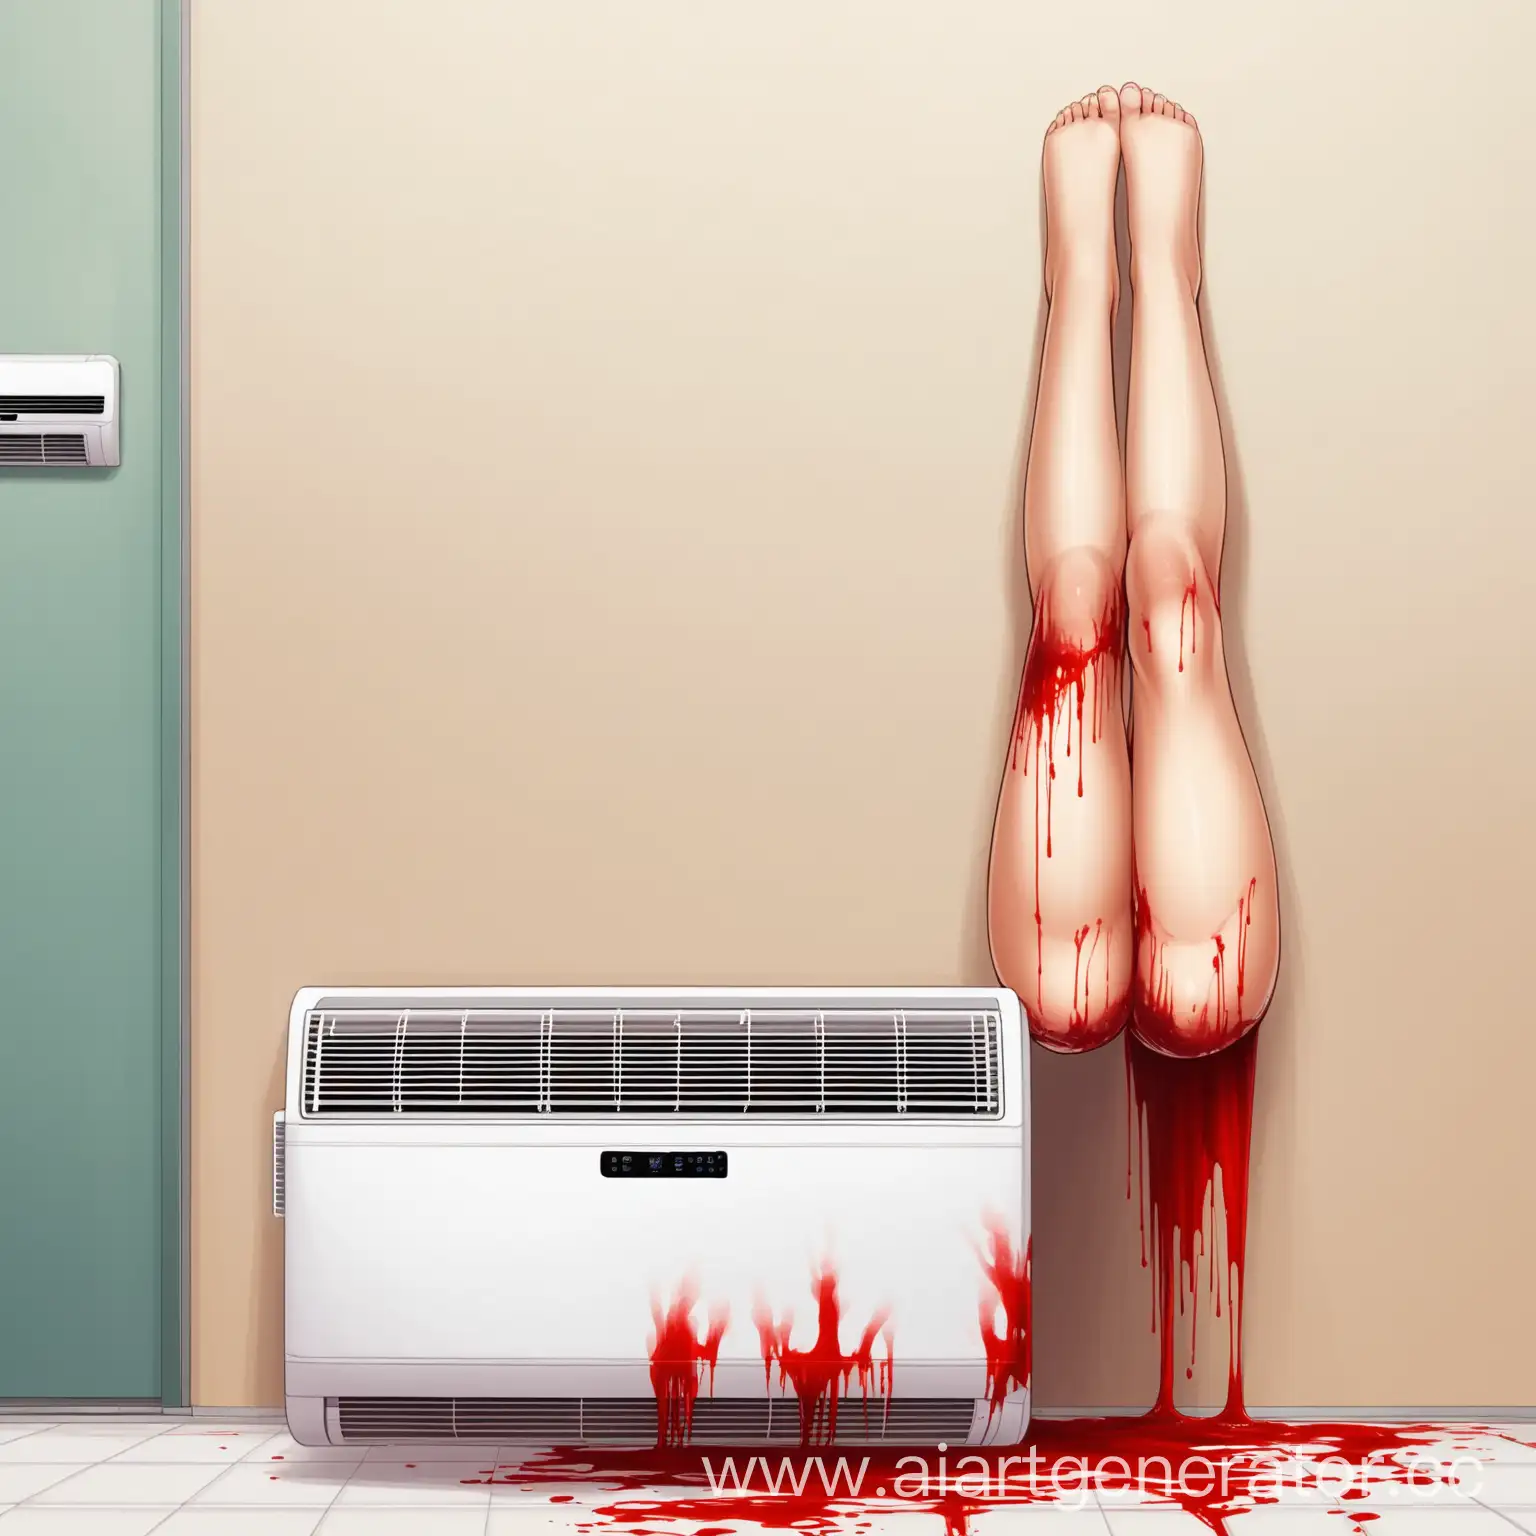 Air-Conditioner-Between-Legs-in-Blood-Flow